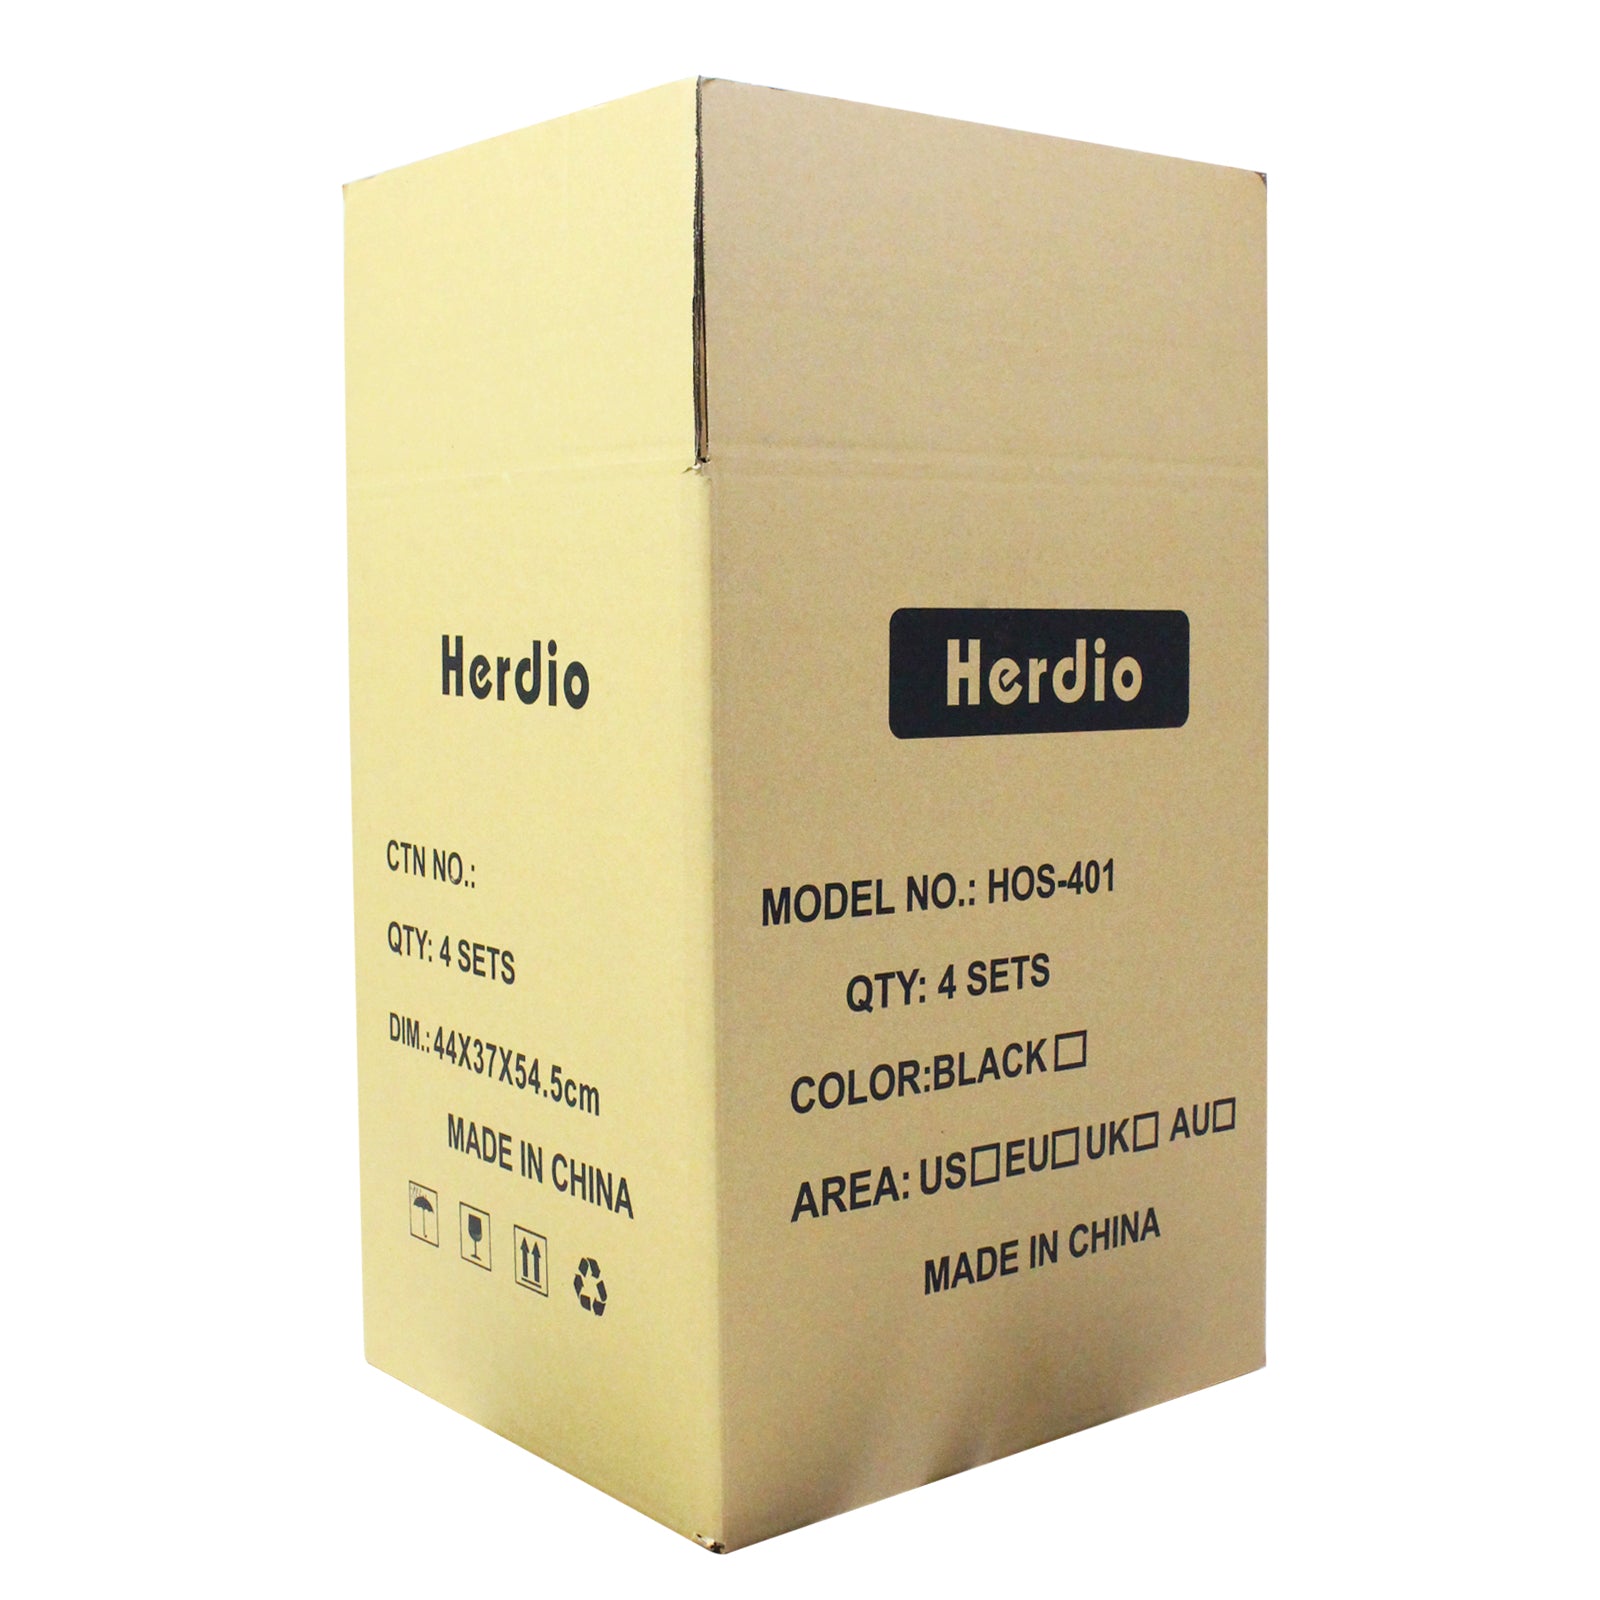 Herdio Shipping Boxes 50*43*58 CM Corrugated Cardboard Boxes,1 Pack - Herdio